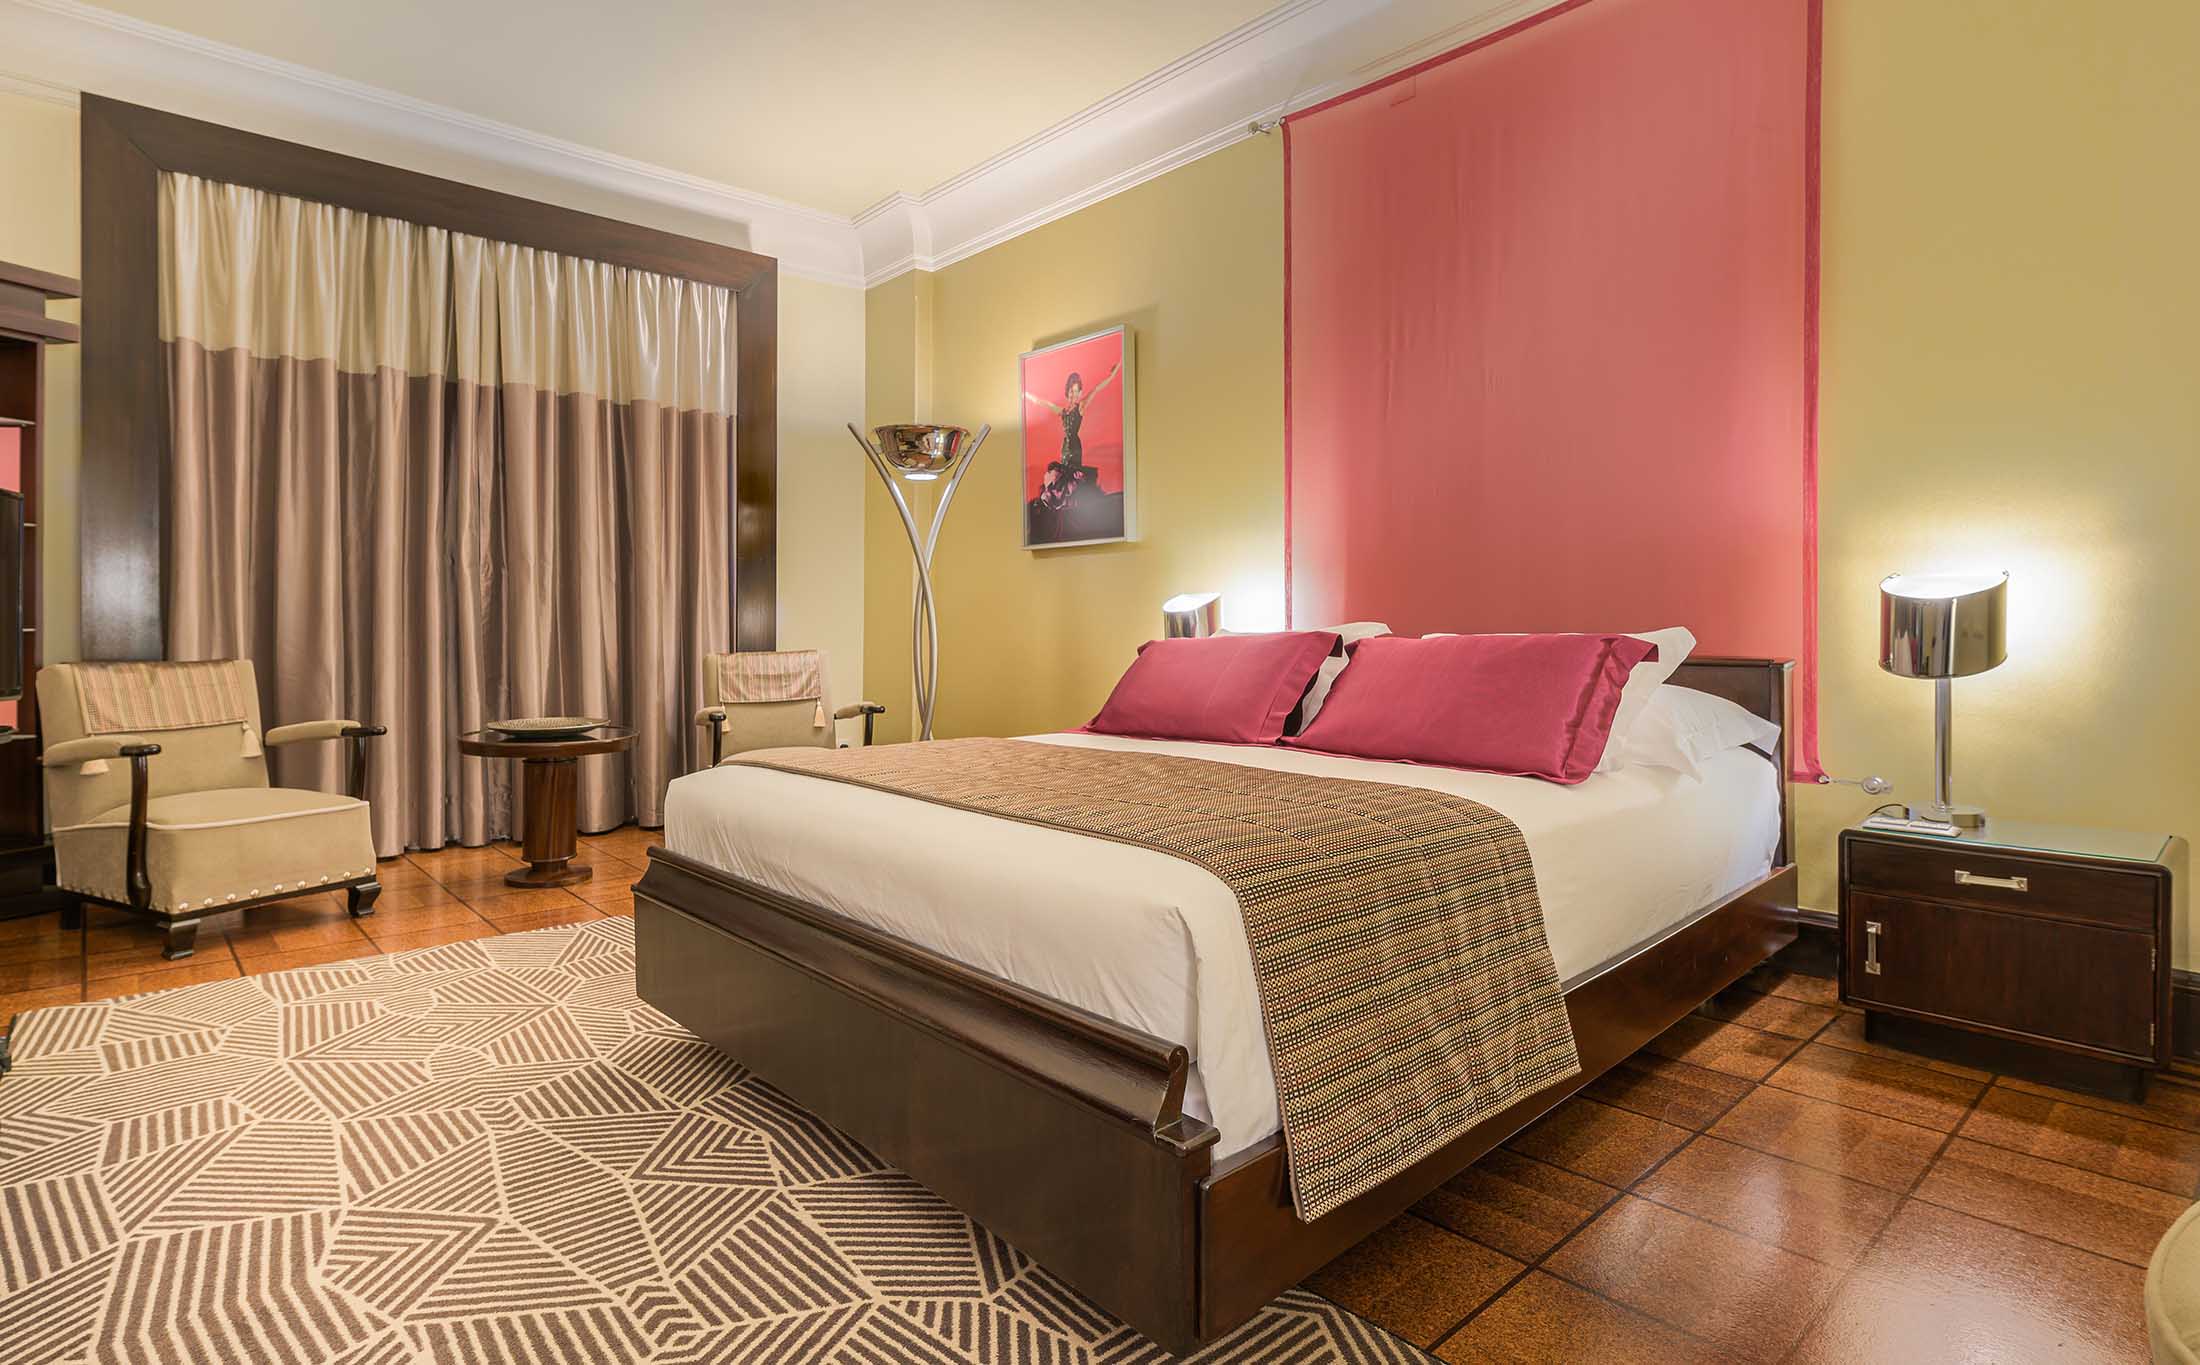 Hotel Britania names room 44 “Room Carmen Sevilla”